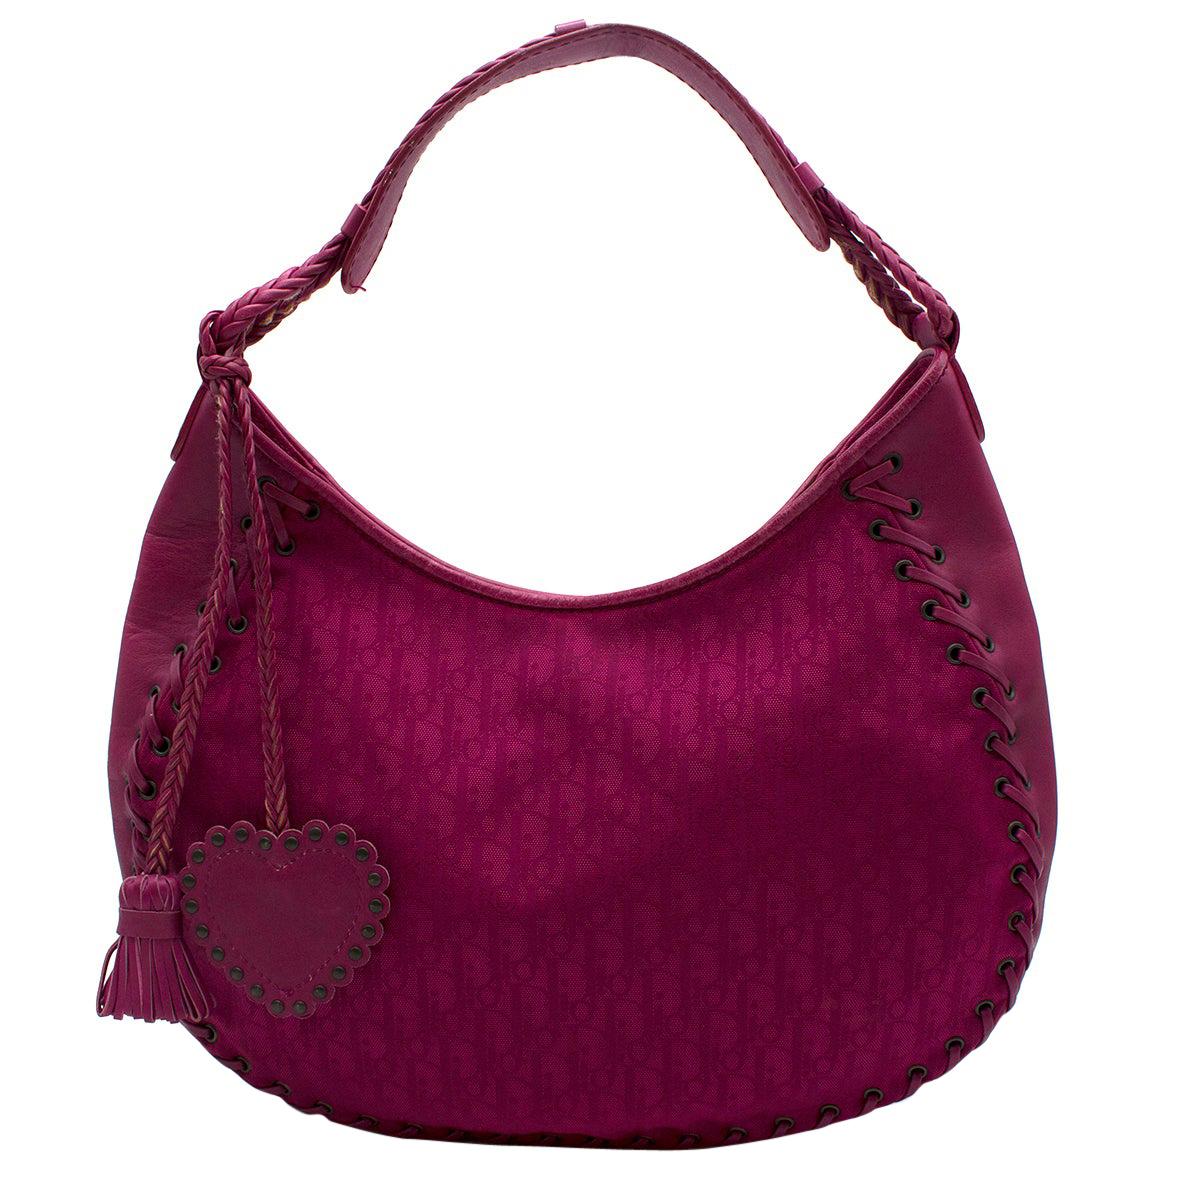 Dior Heart Charm Hobo Bag in Hot Pink